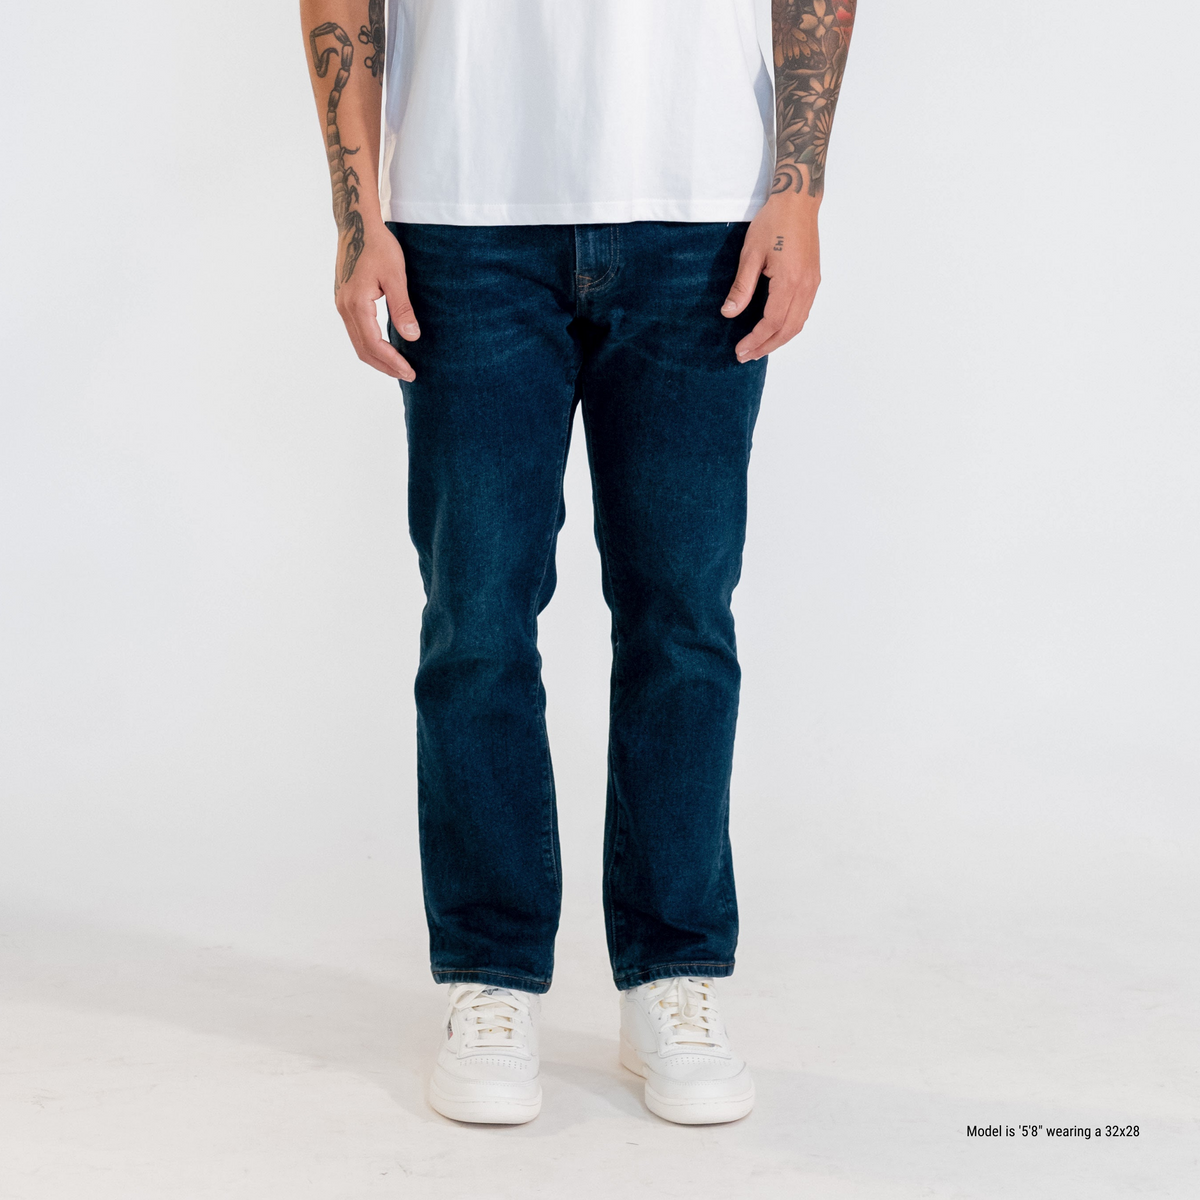 Slim Fit Jeans for Shorter Men – Abbreviated Apparel